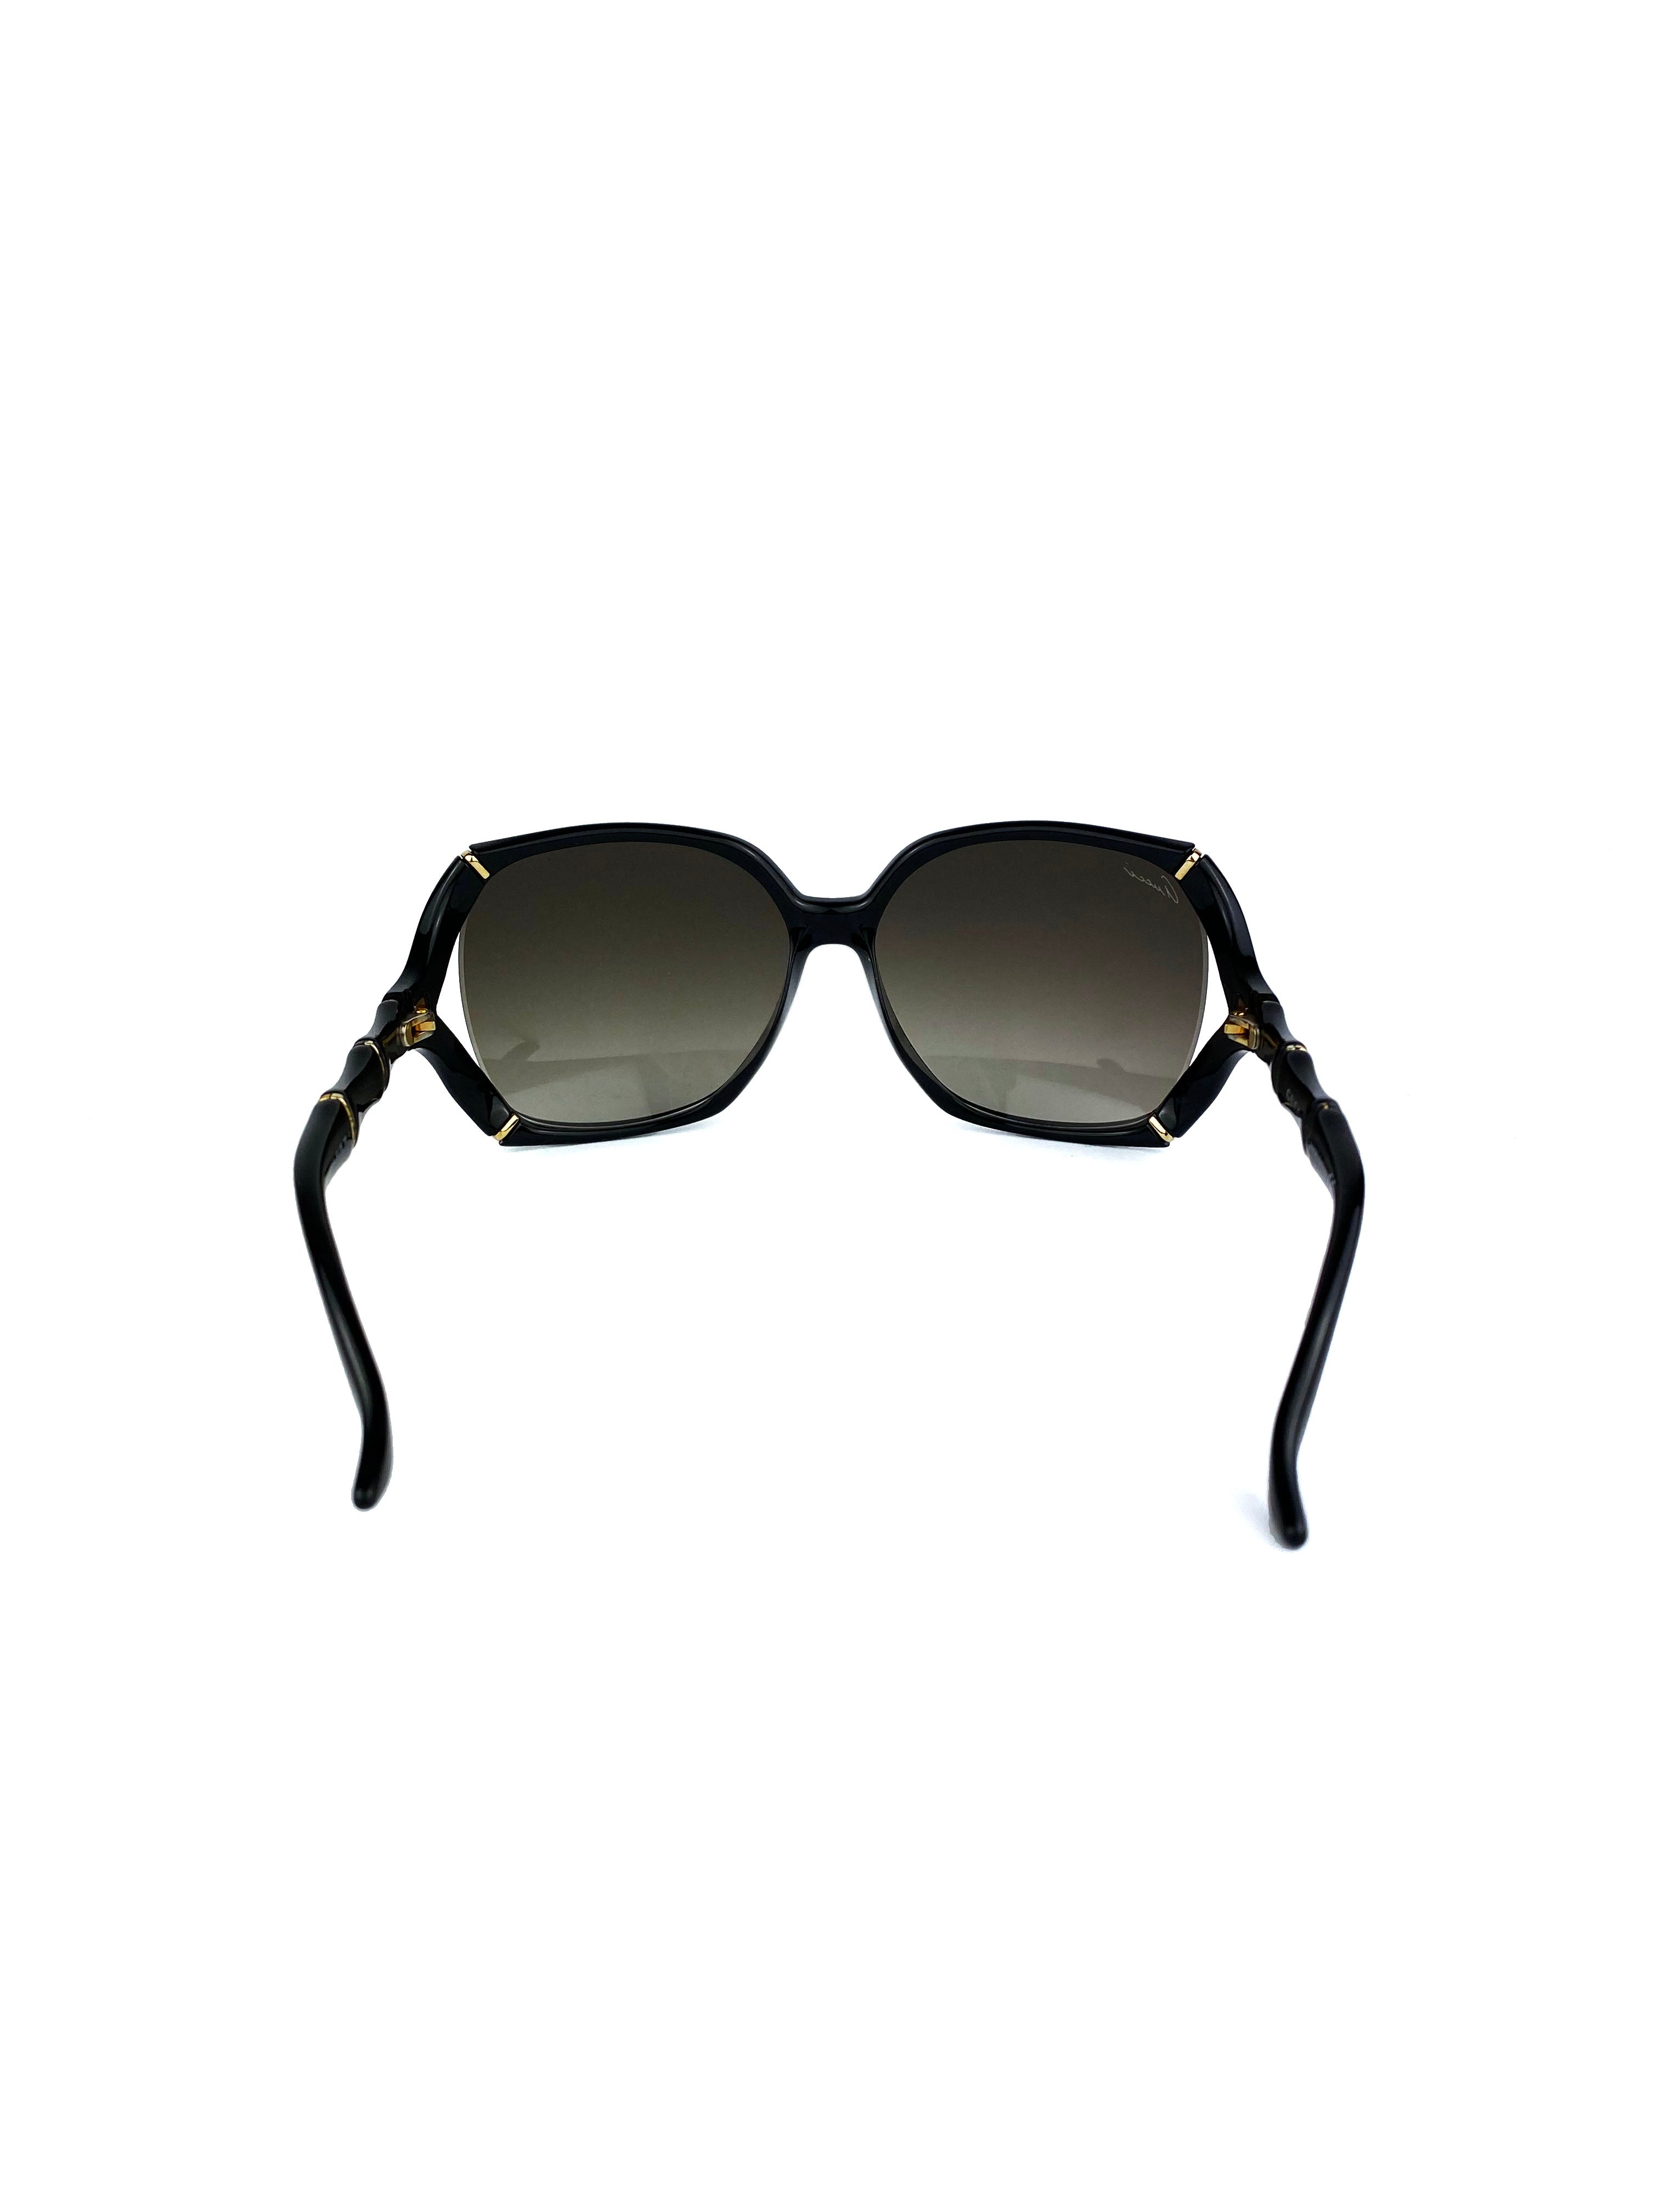 gucci-bamboo-sunglasses-4.jpg